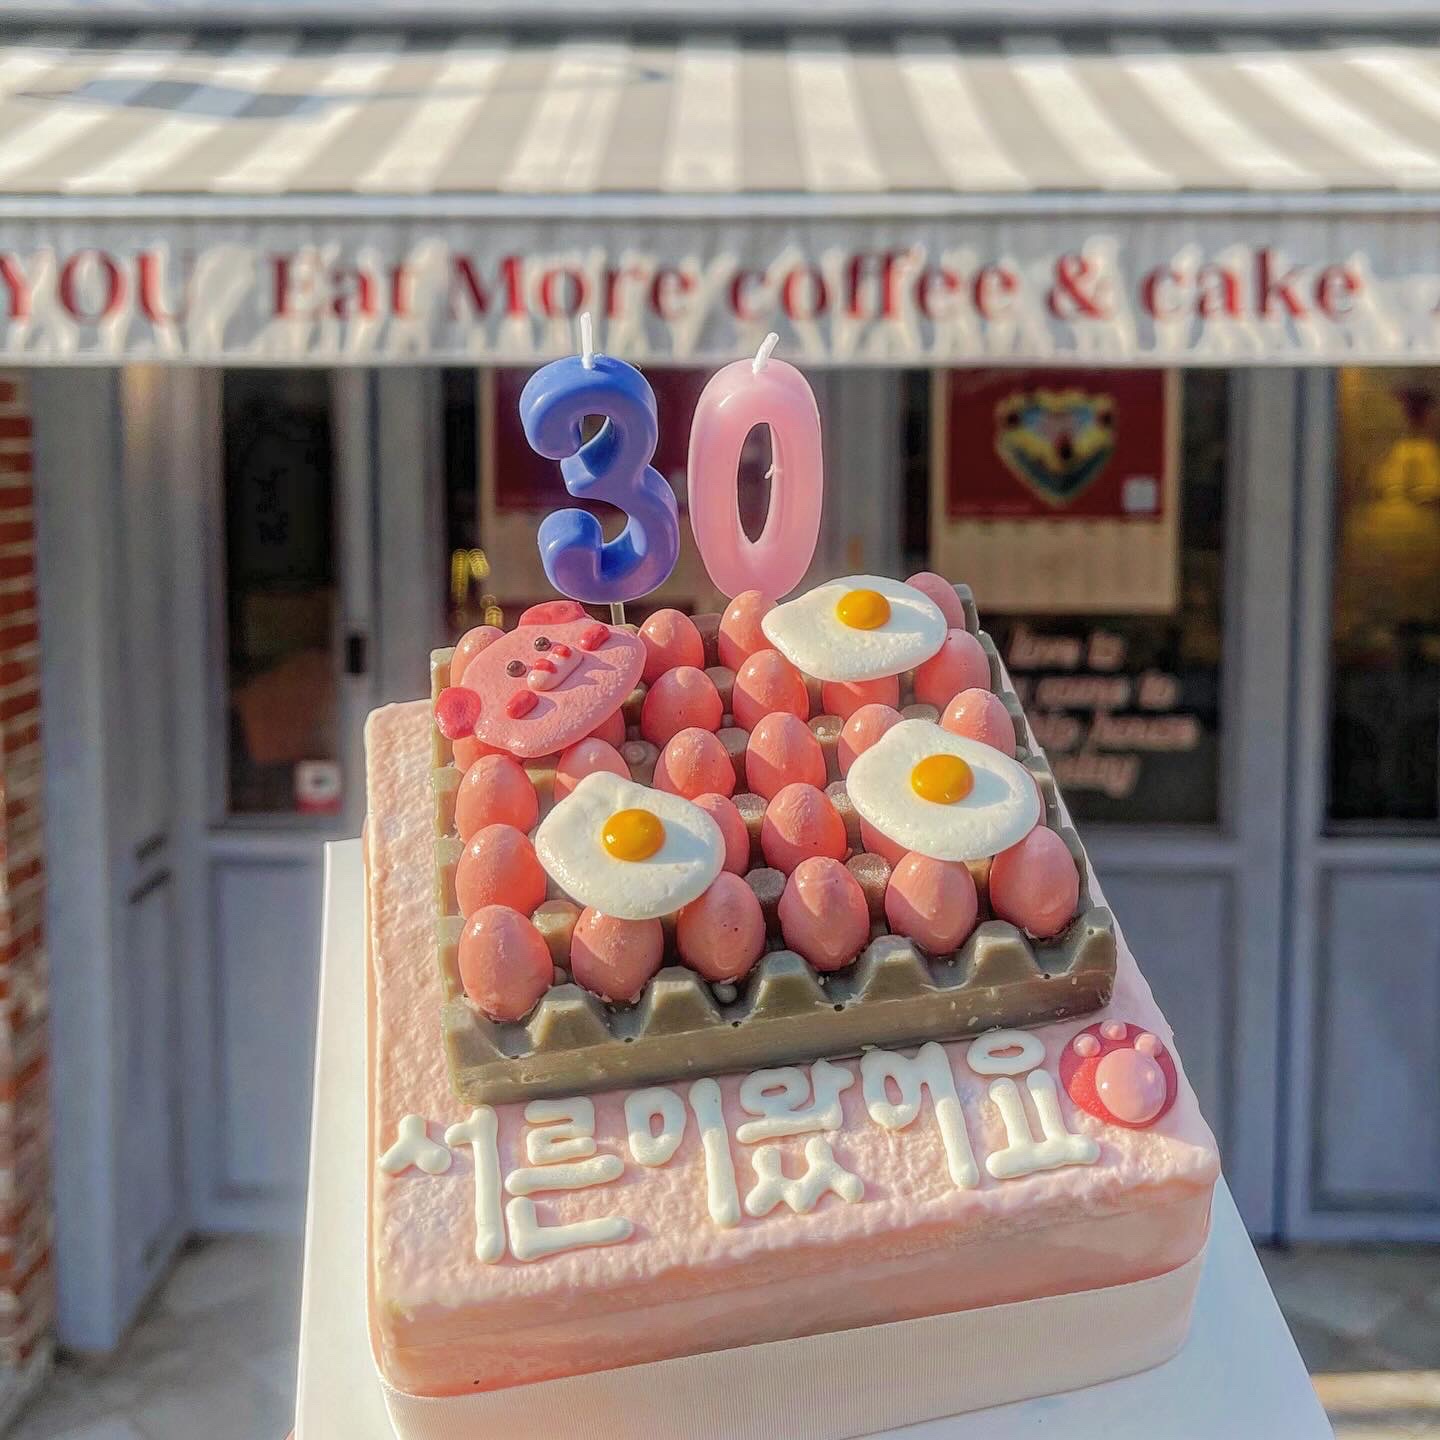 [Lotte] 30살 (십이간지) 계란한판 케이크